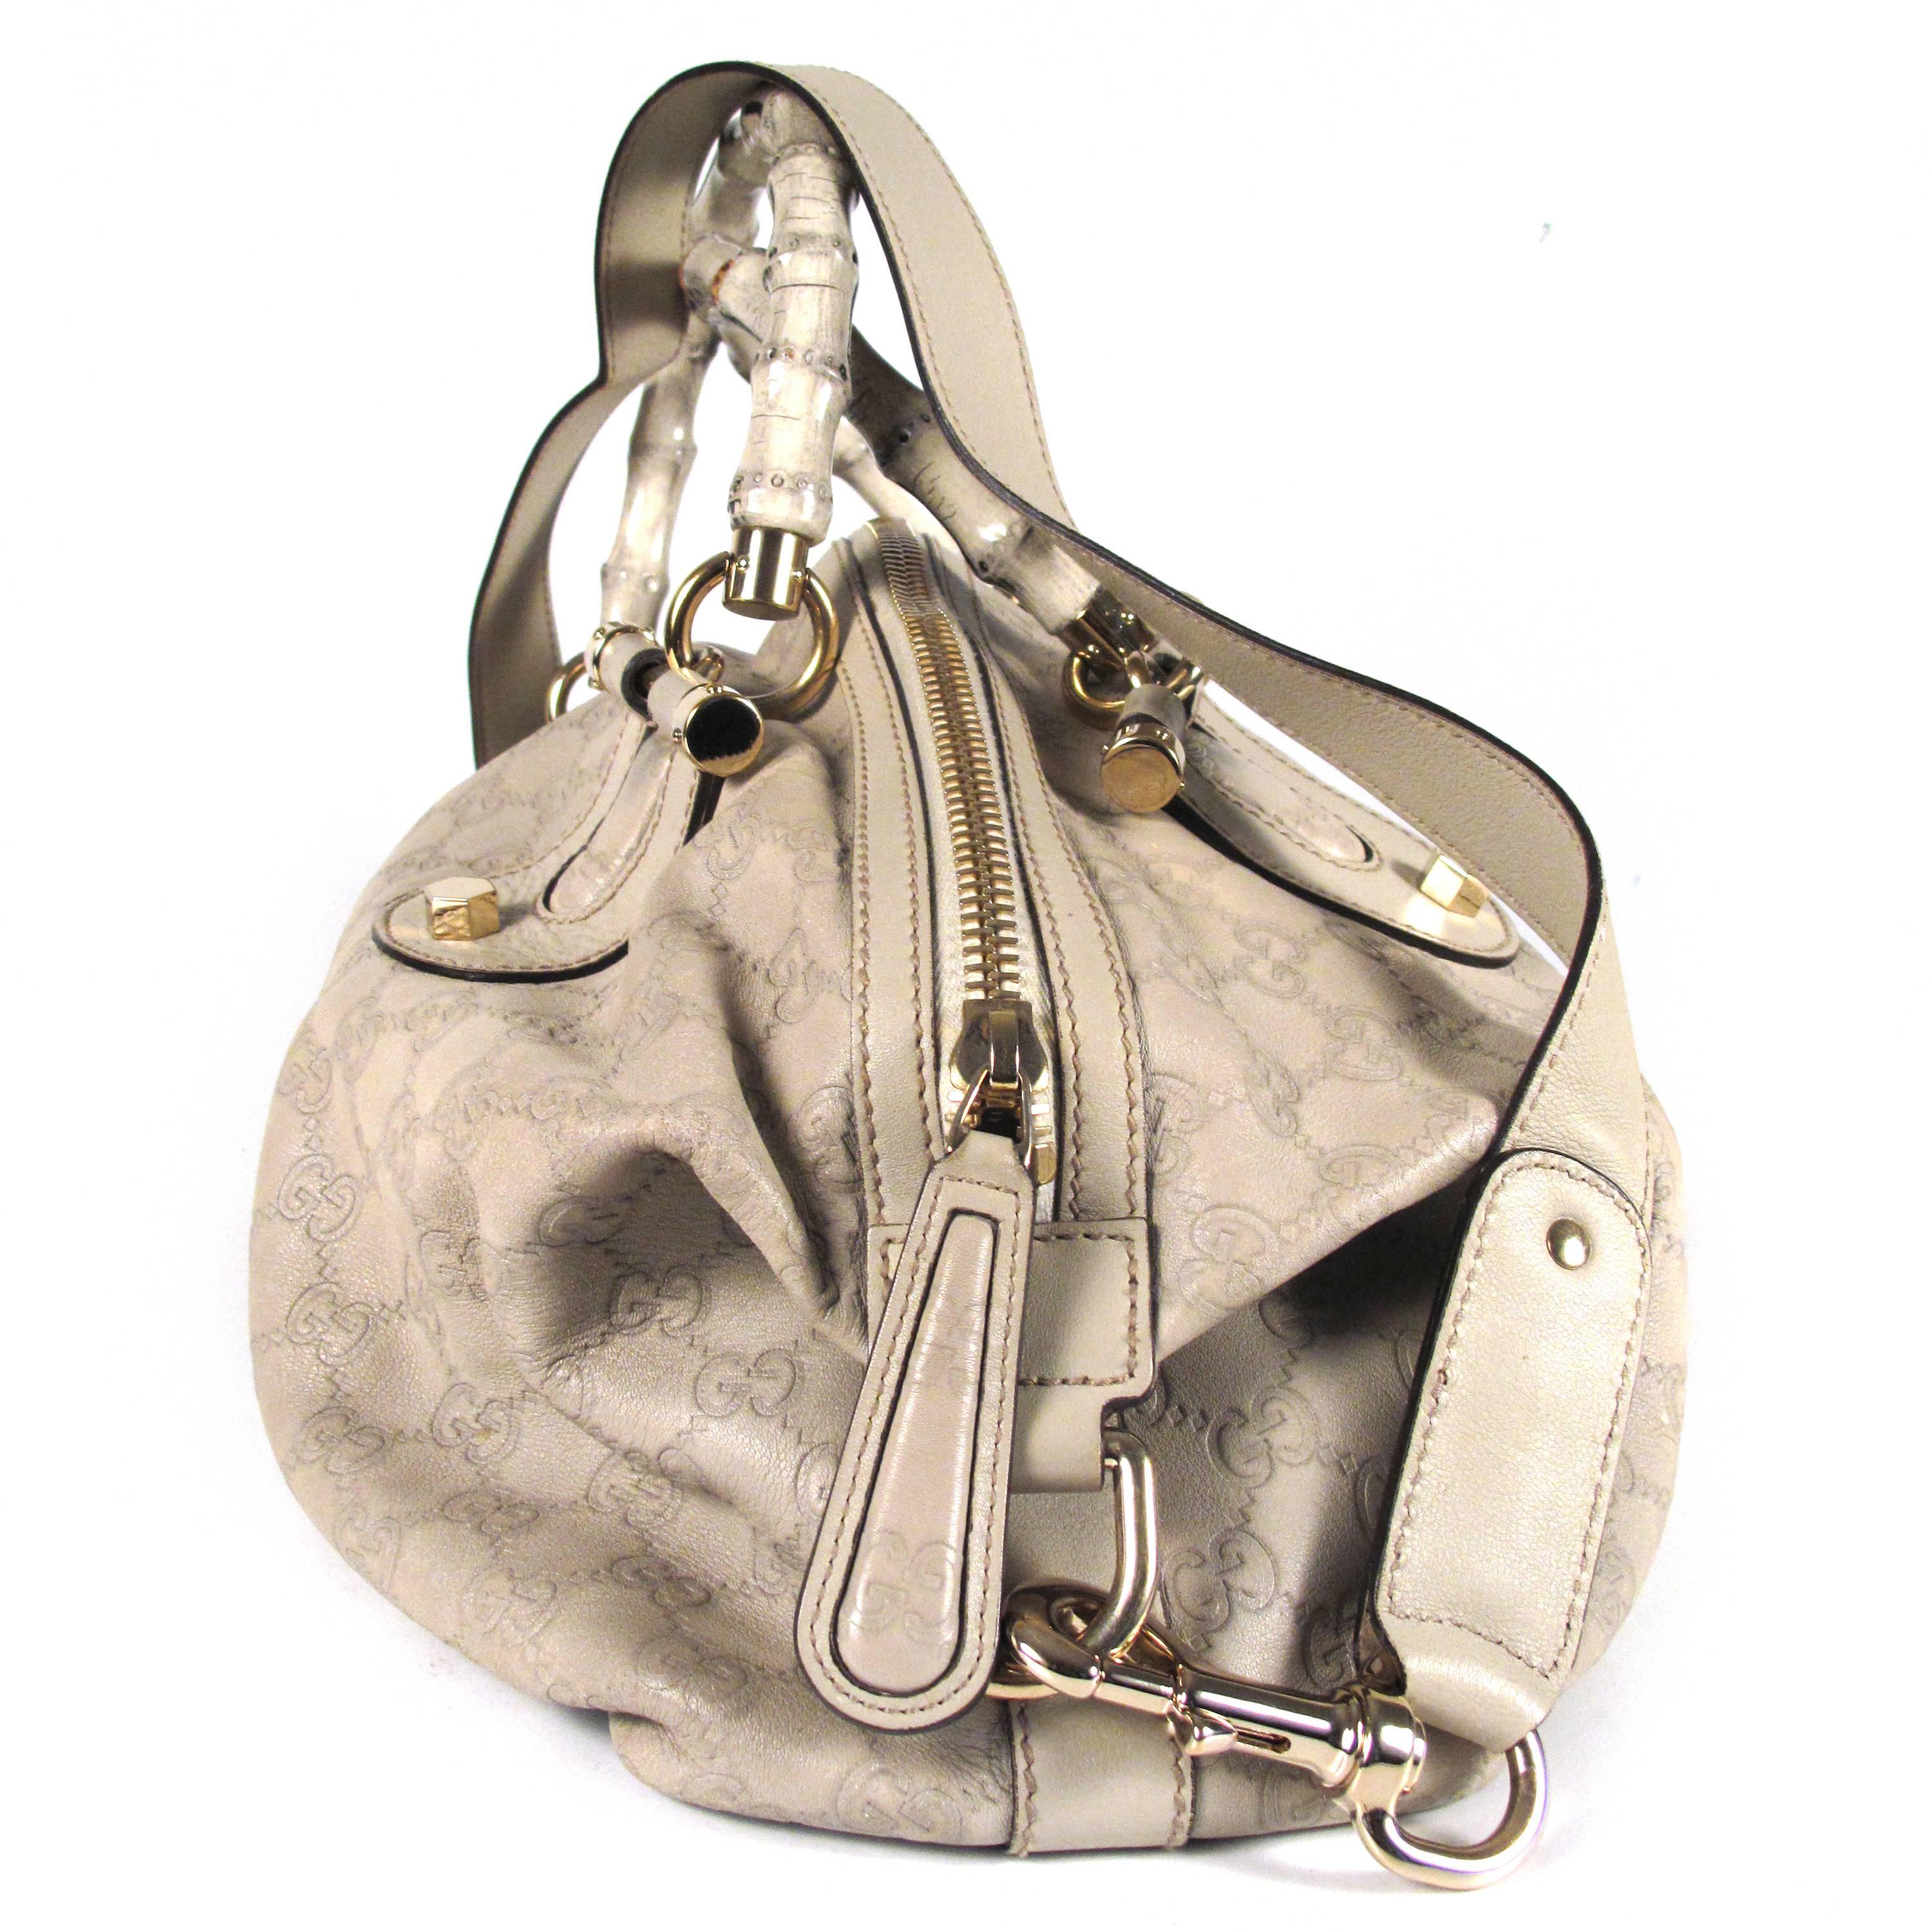 Gray Gucci Bamboo Leather Monogram Shoulder Bag - Tan Beige GG Gold Satchel Handbag